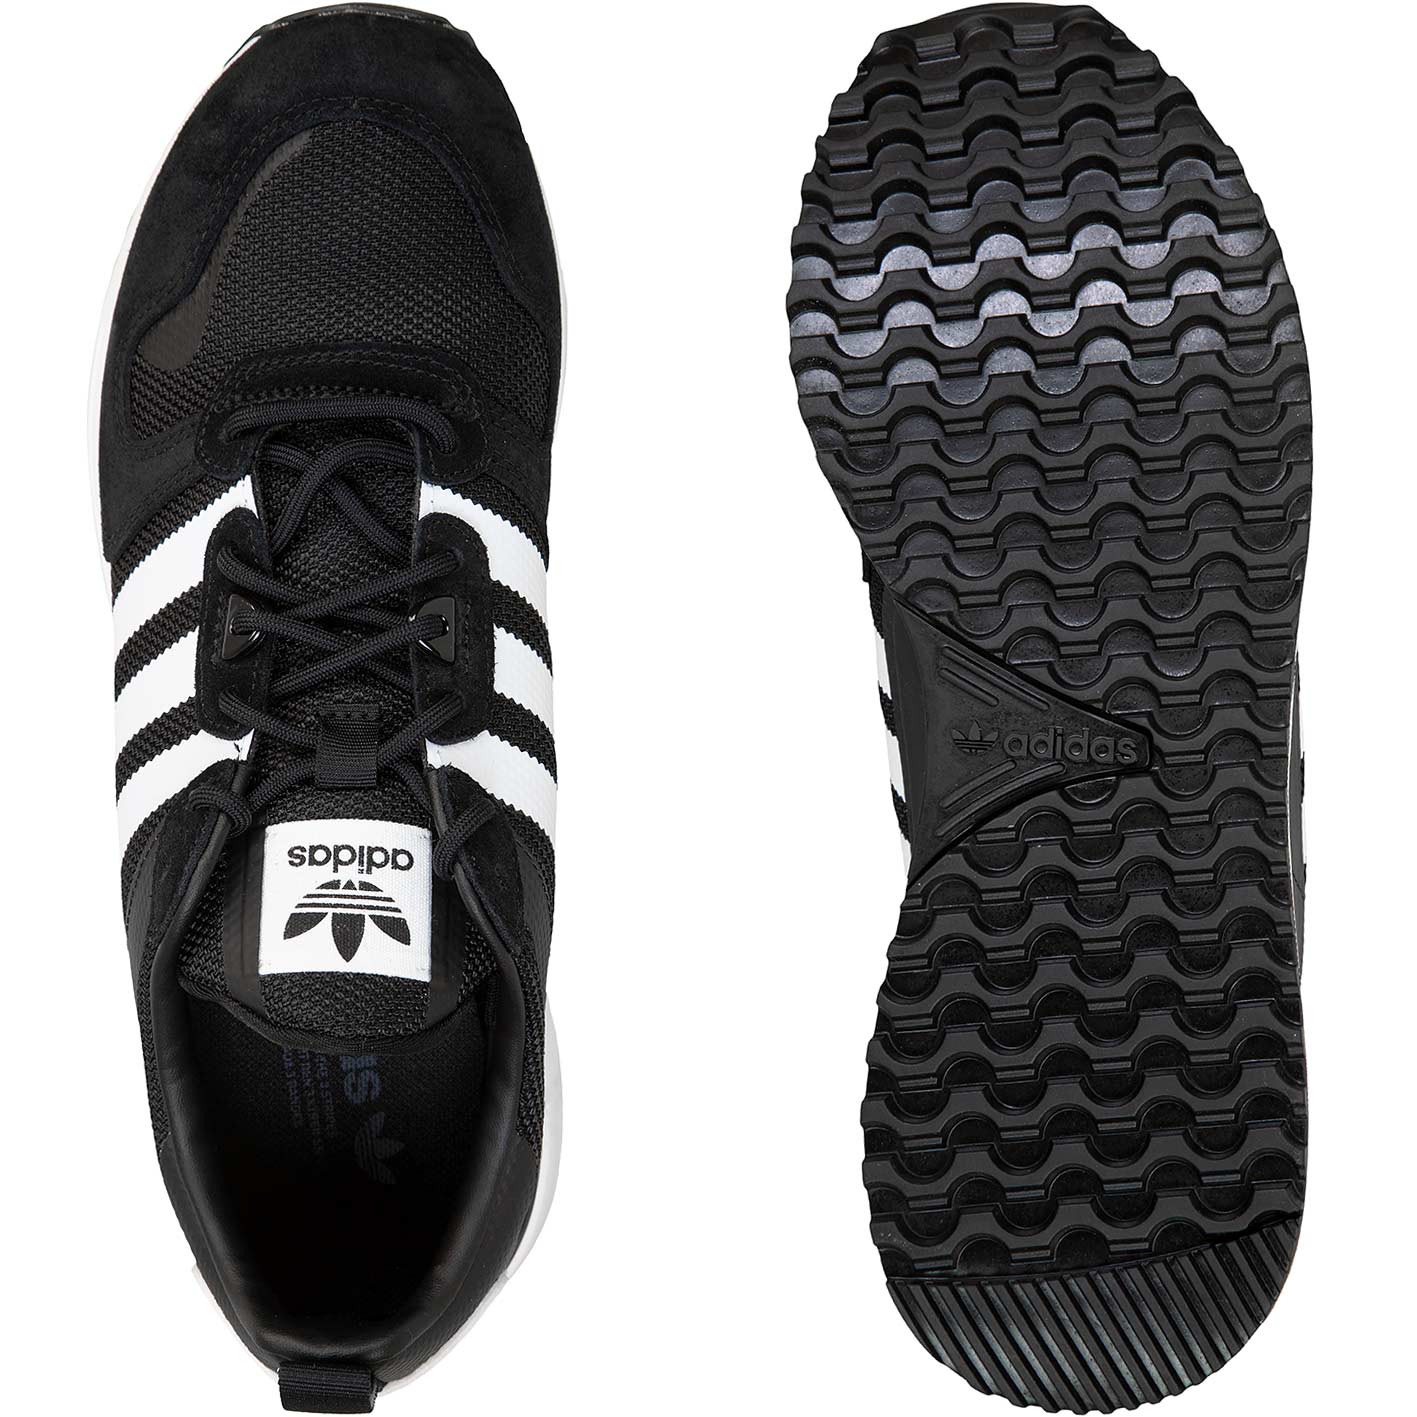 ☆ Adidas ZX 700 HD Sneaker schwarz - hier bestellen!